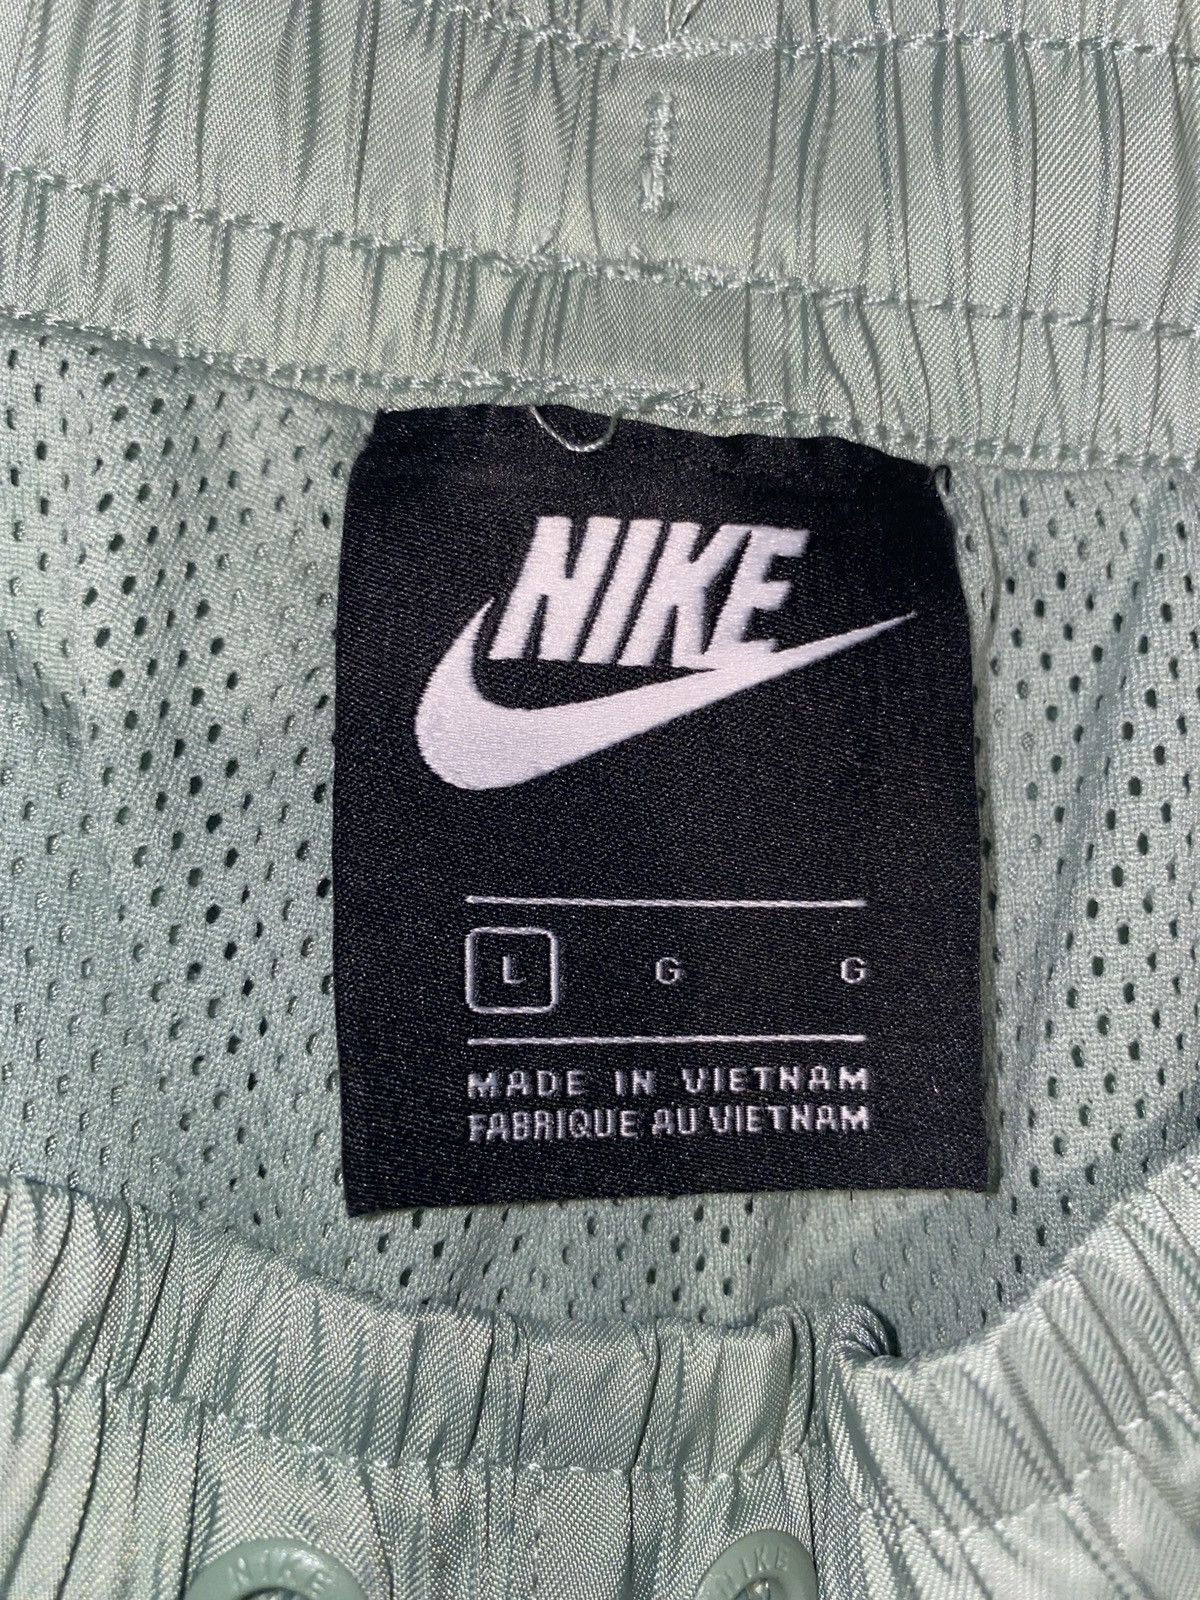 Nike Nike Woven Shorts Size US 32 / EU 48 - 3 Preview